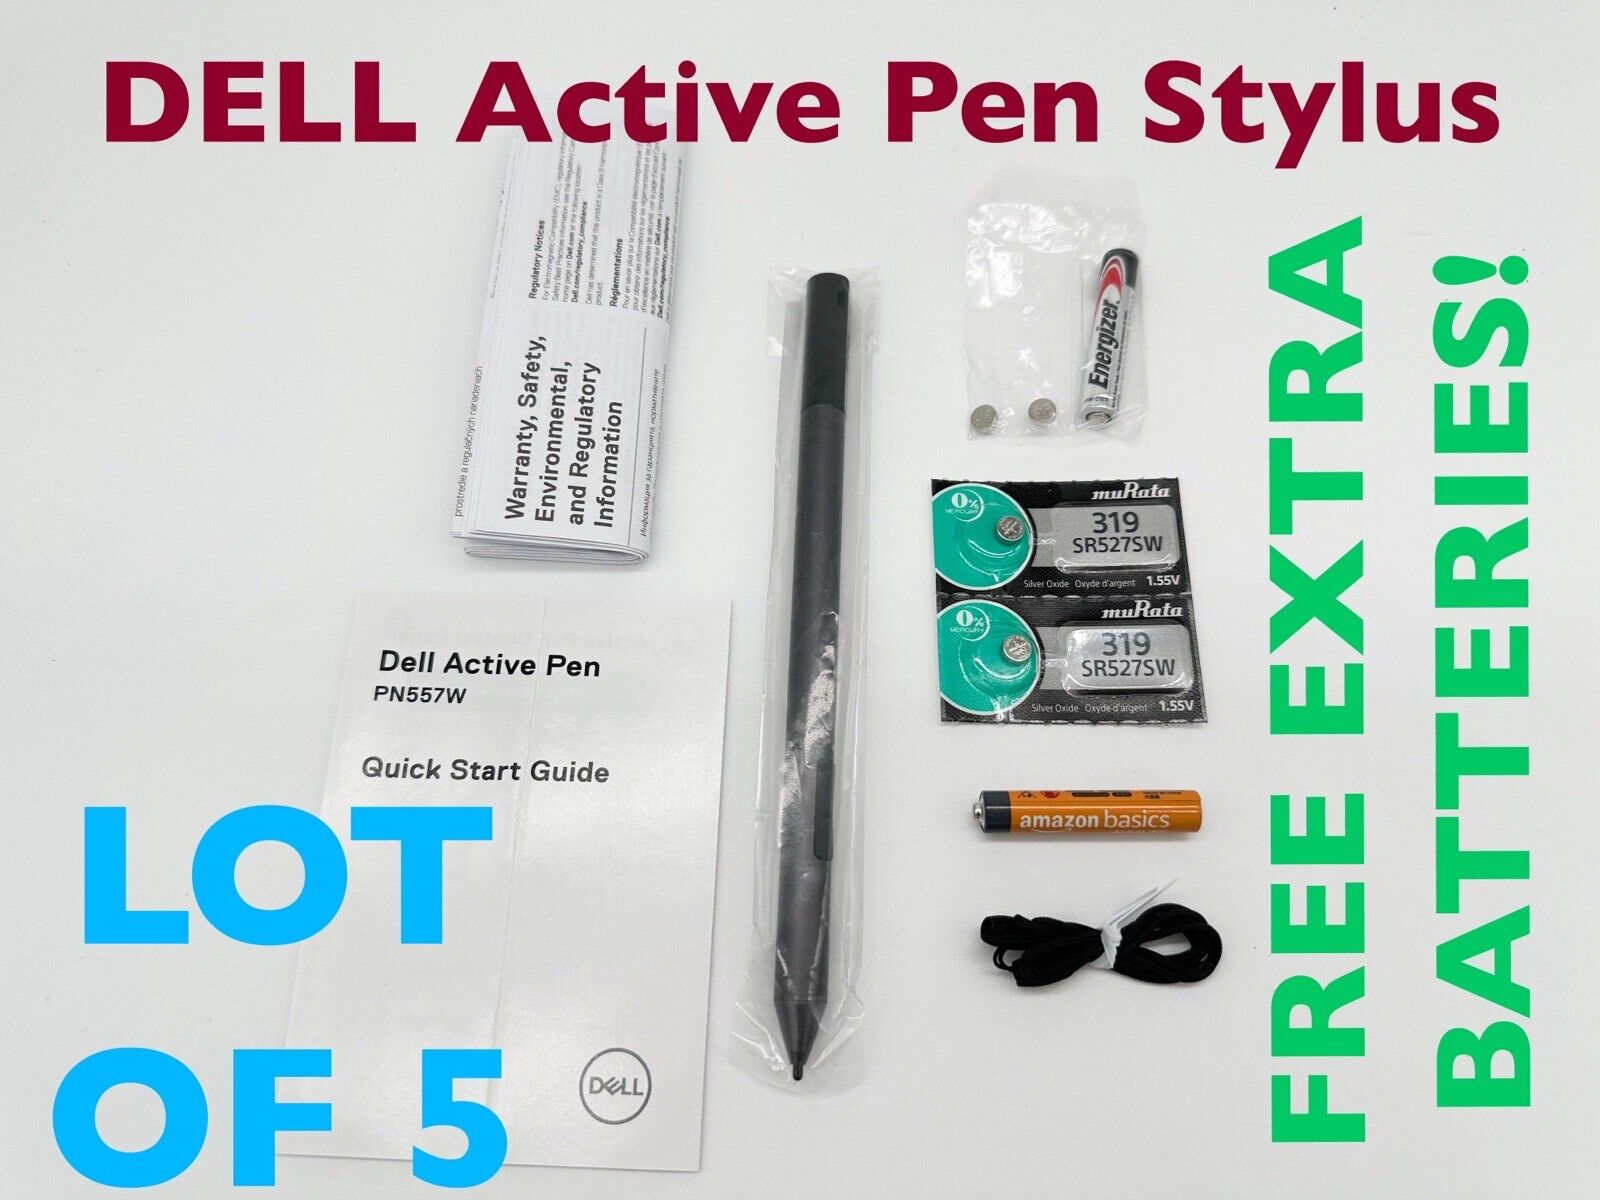 LOT OF 5 Dell Active Pen Stylus PN557W Unused/Open Box+FREE BATTERIES